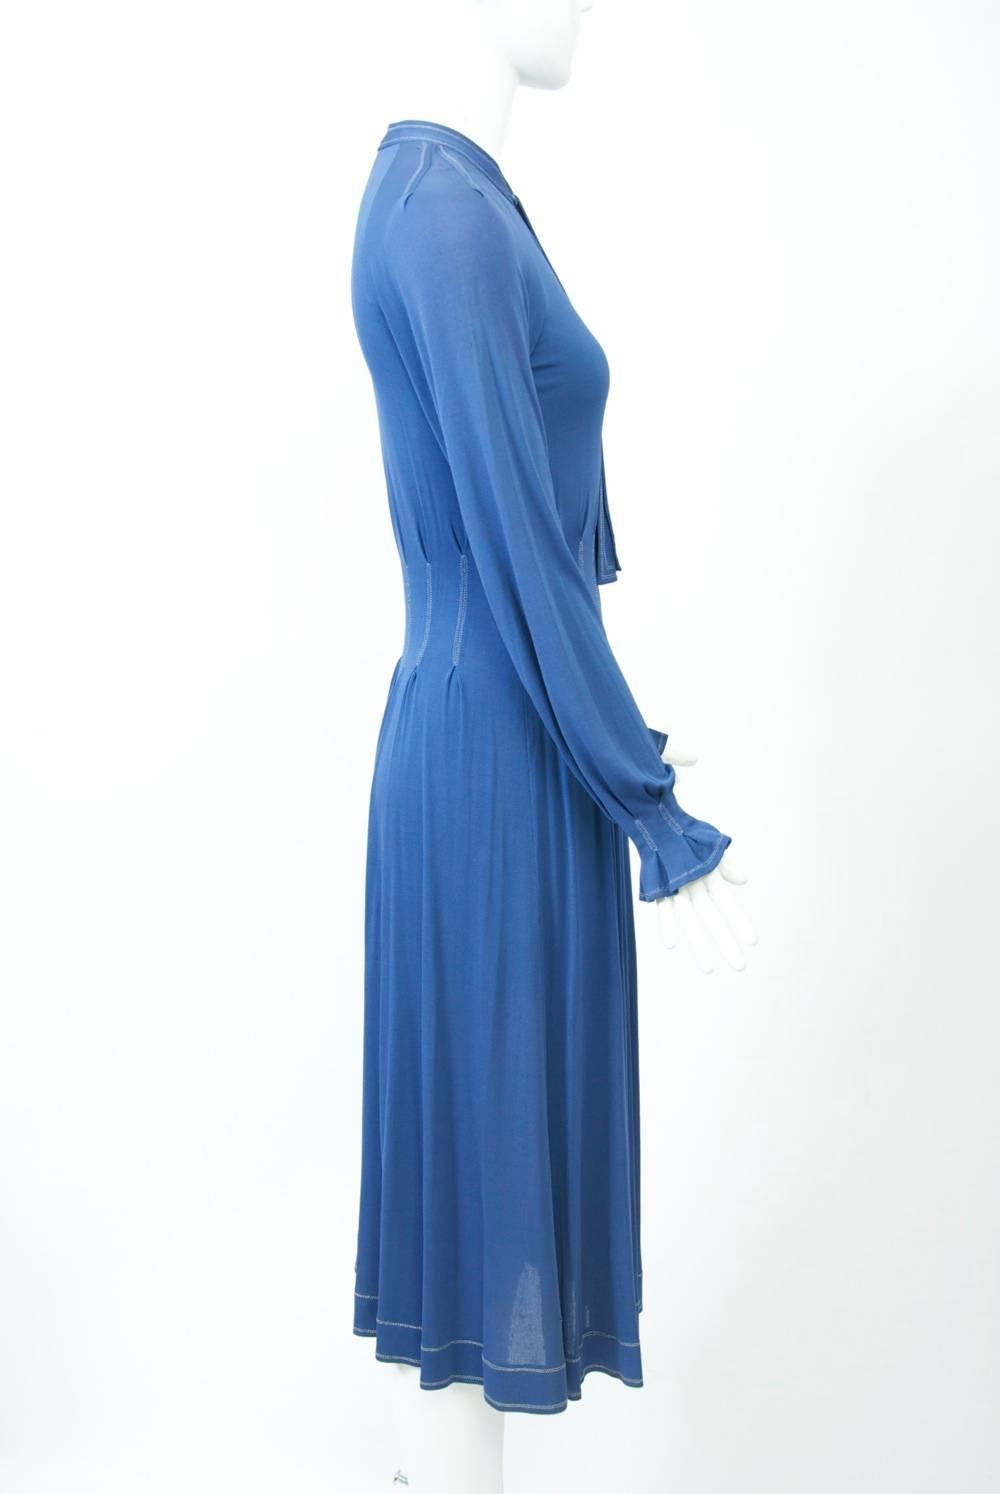 Jean Muir Blue Dress 1